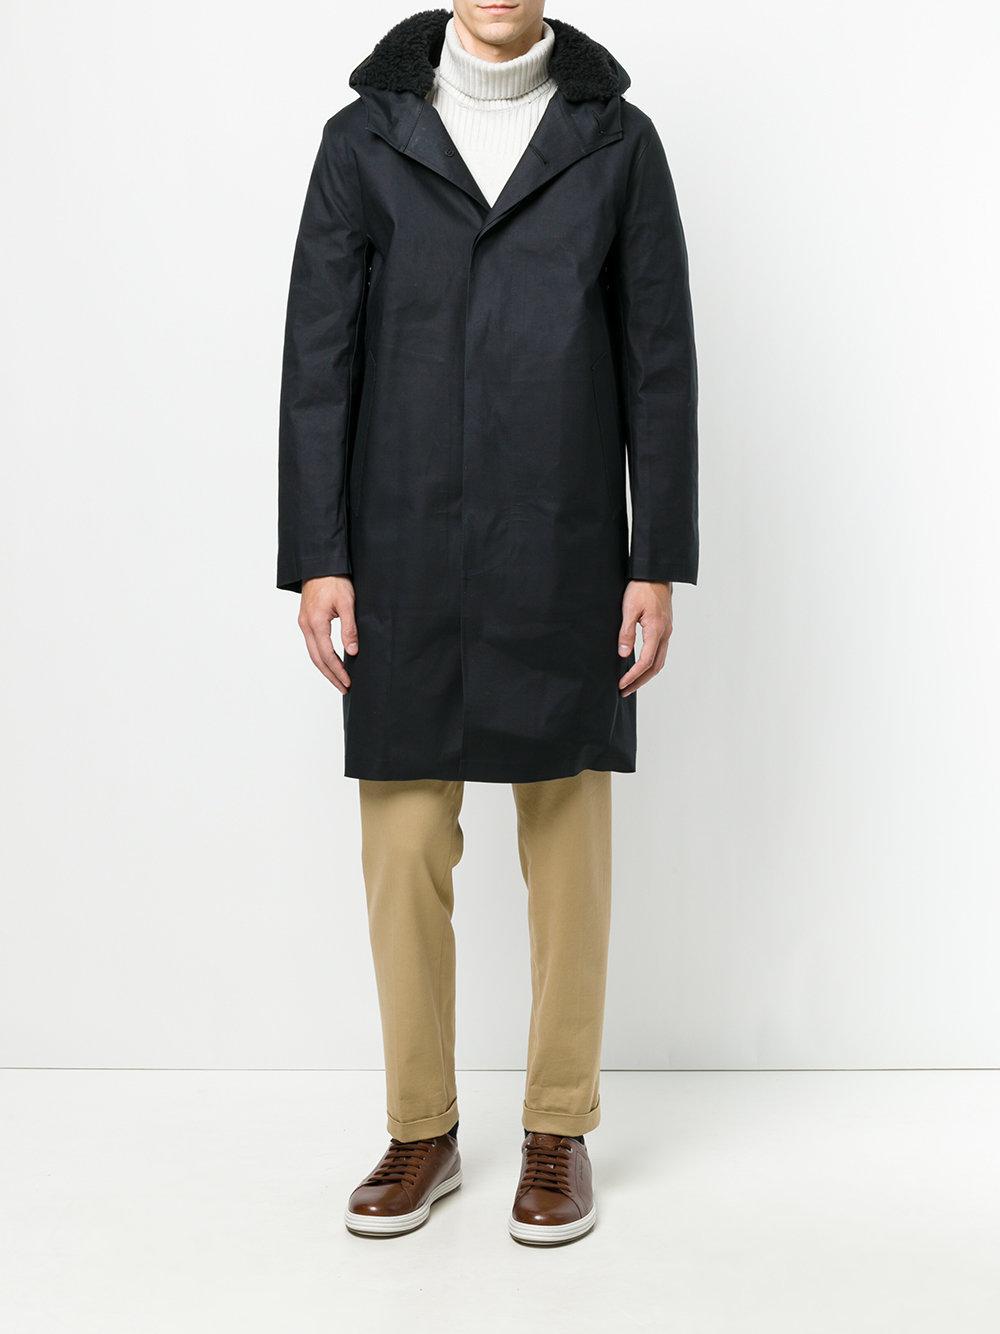 Lyst - Mackintosh Waterproof Coat in Black for Men